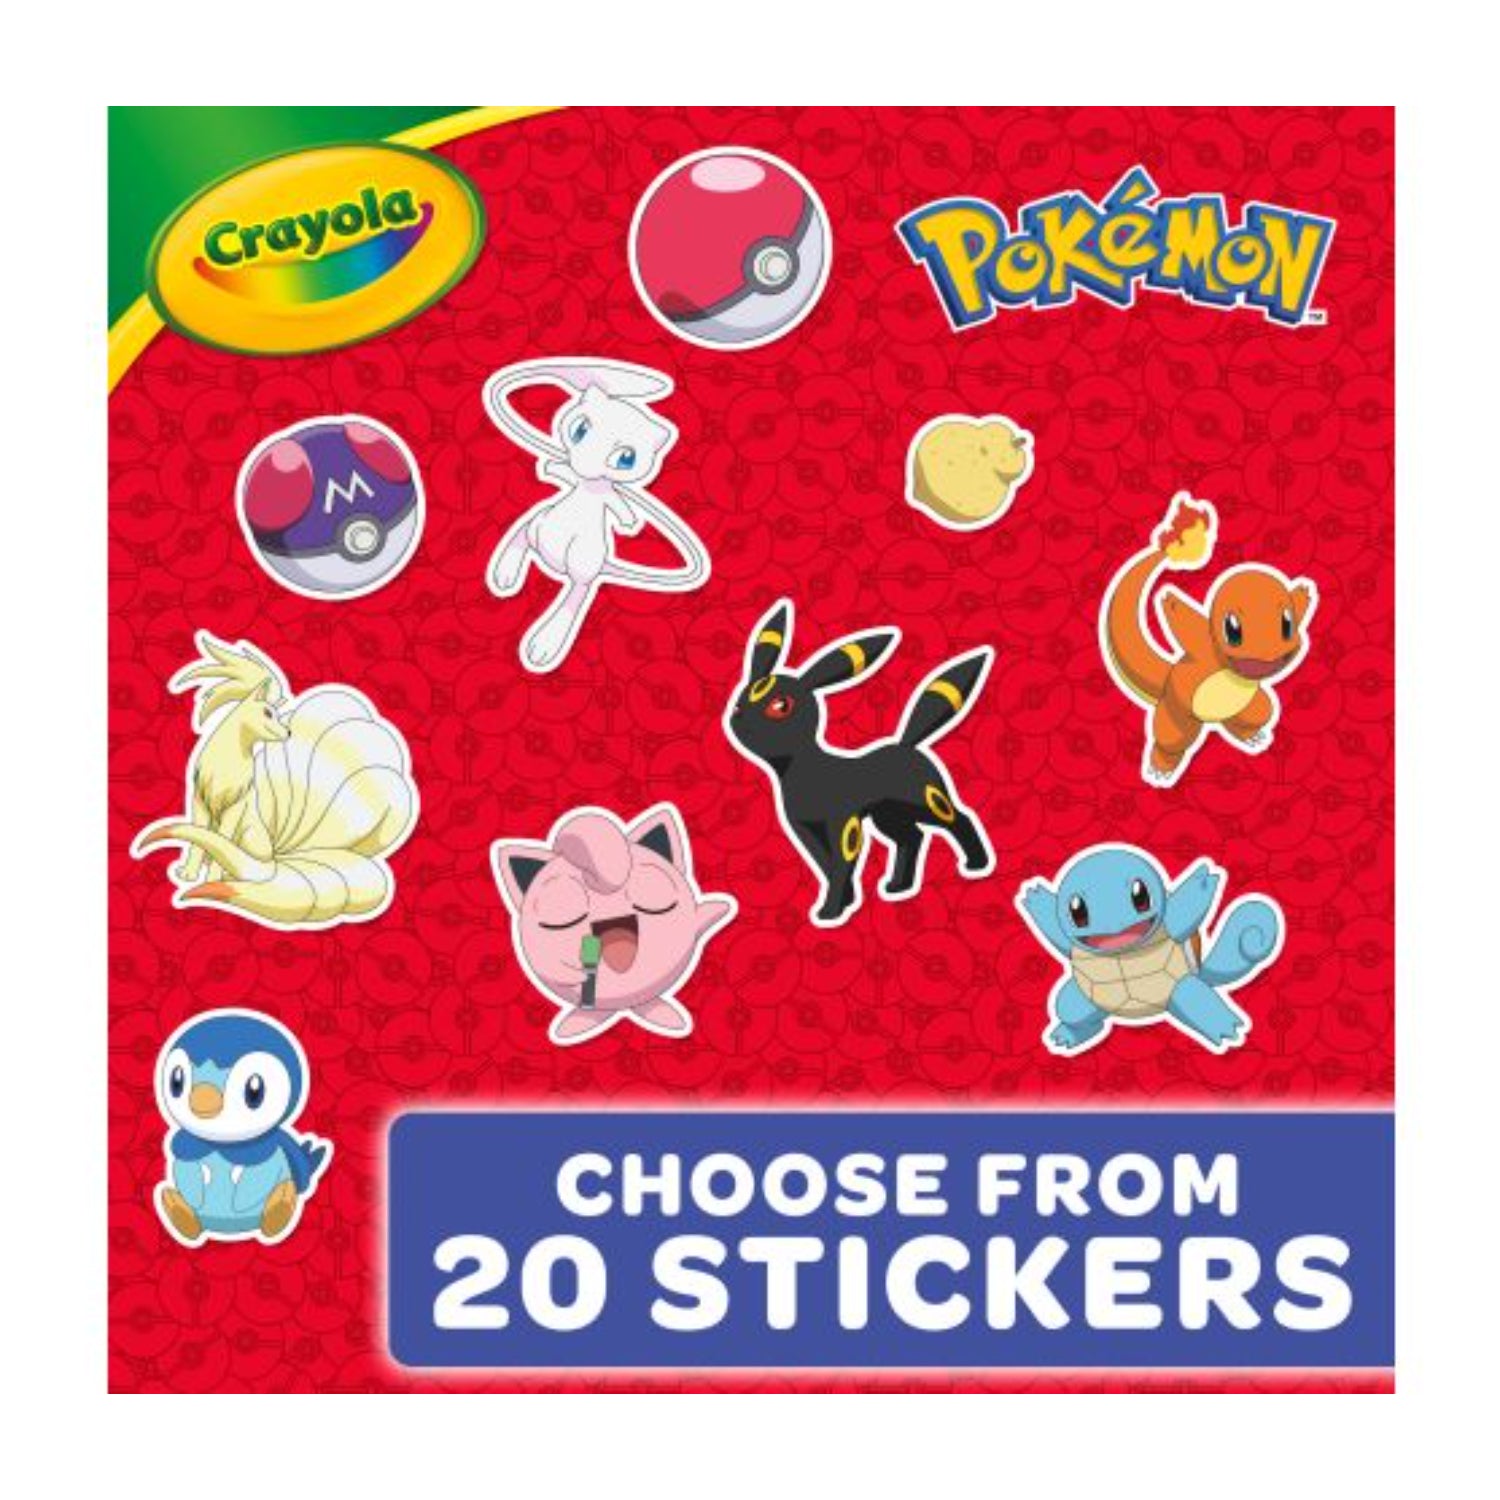 Pokemon Coloring Book for Kids, Teens - Bundle with Pokemon Advanced  Coloring Book with Stickers Plus Pokemon Cards for Boys | Pokemon Coloring  Set